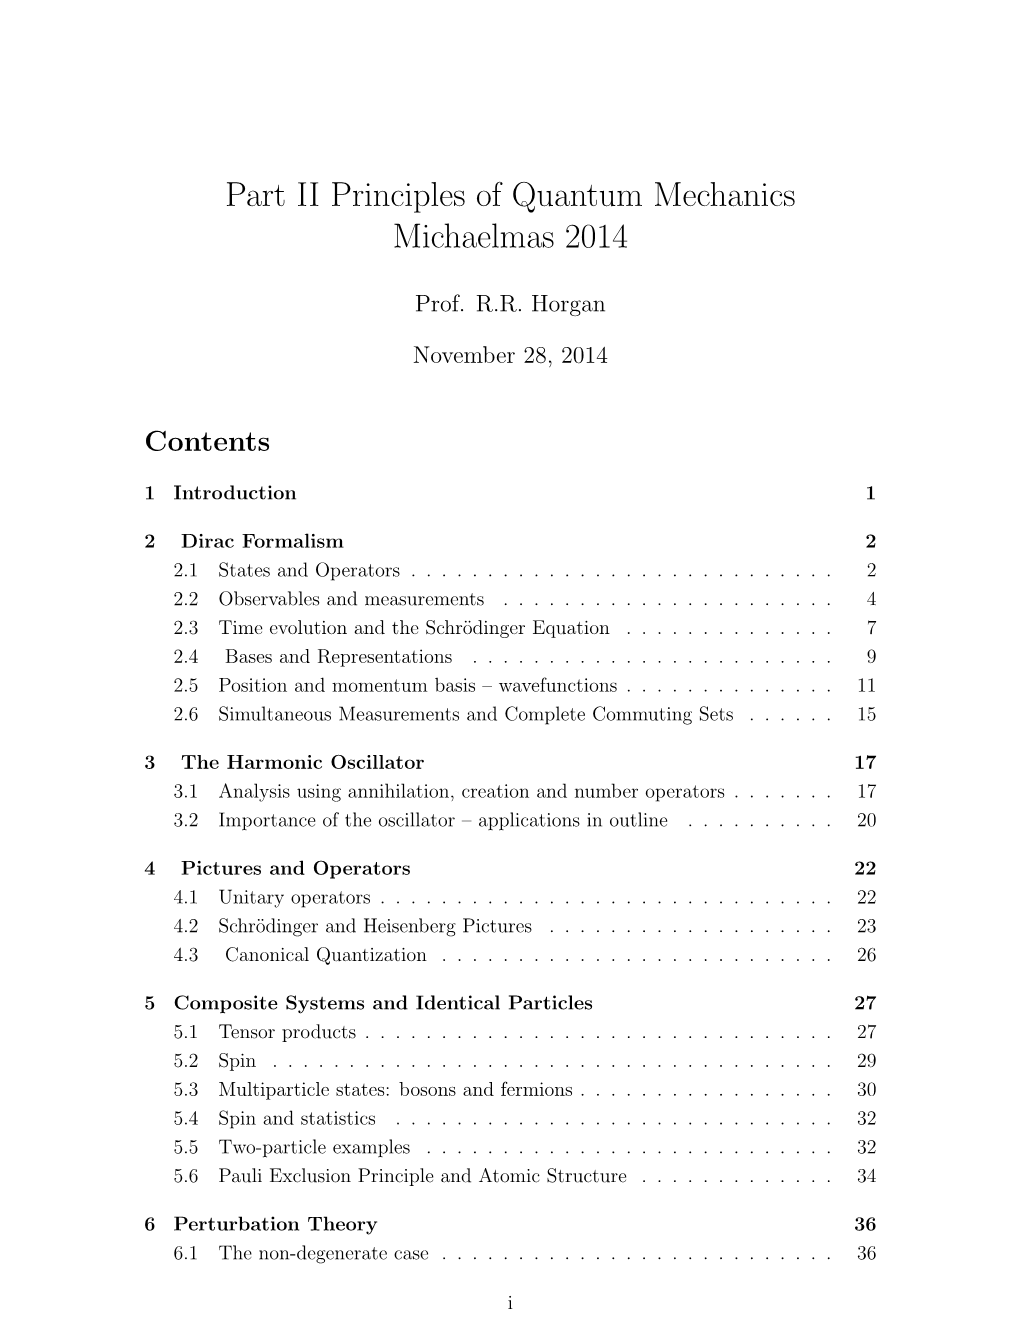 Part II Principles of Quantum Mechanics Michaelmas 2014